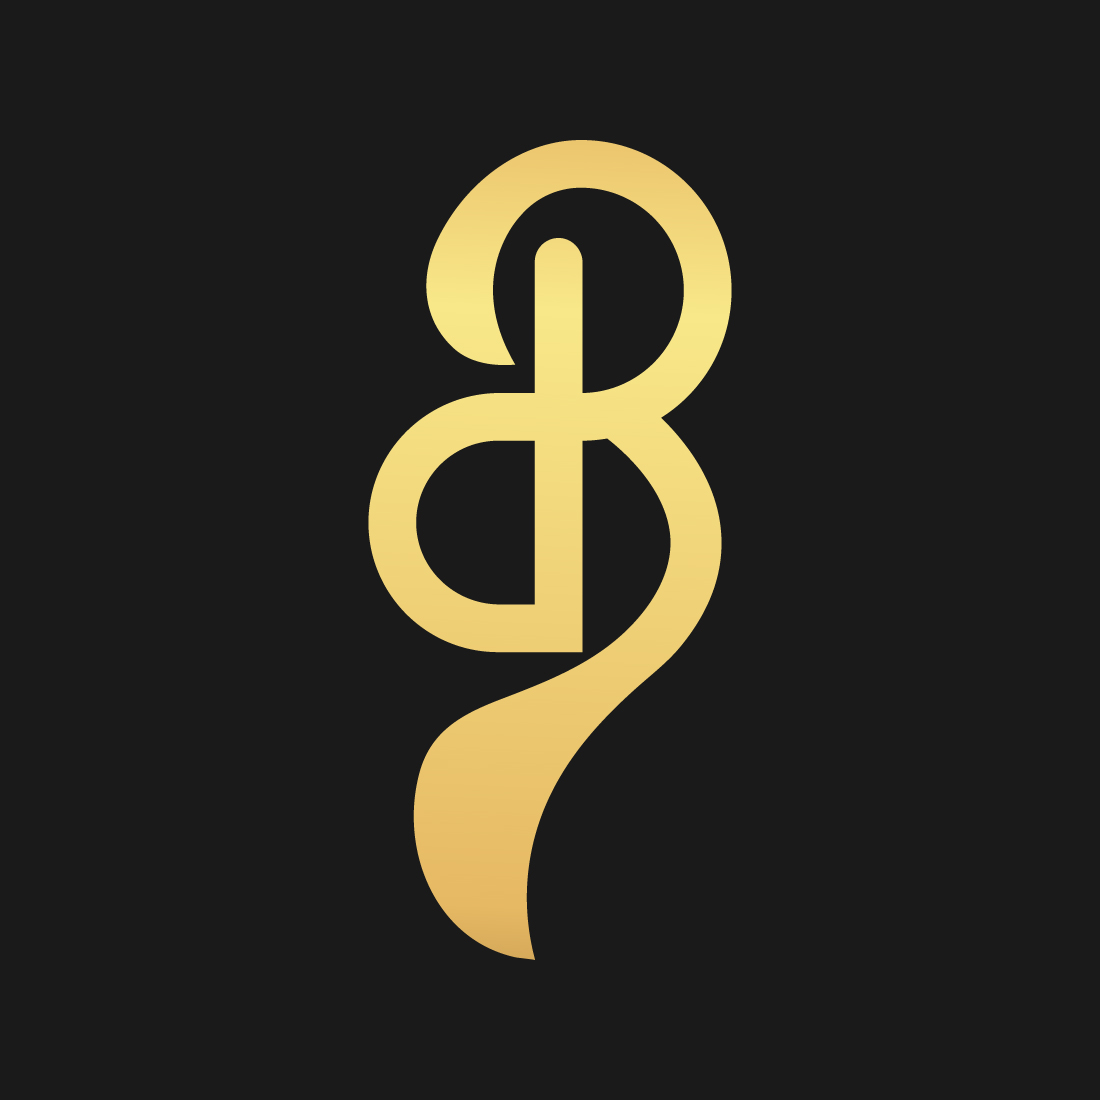 Luxury DB logo design cover image.